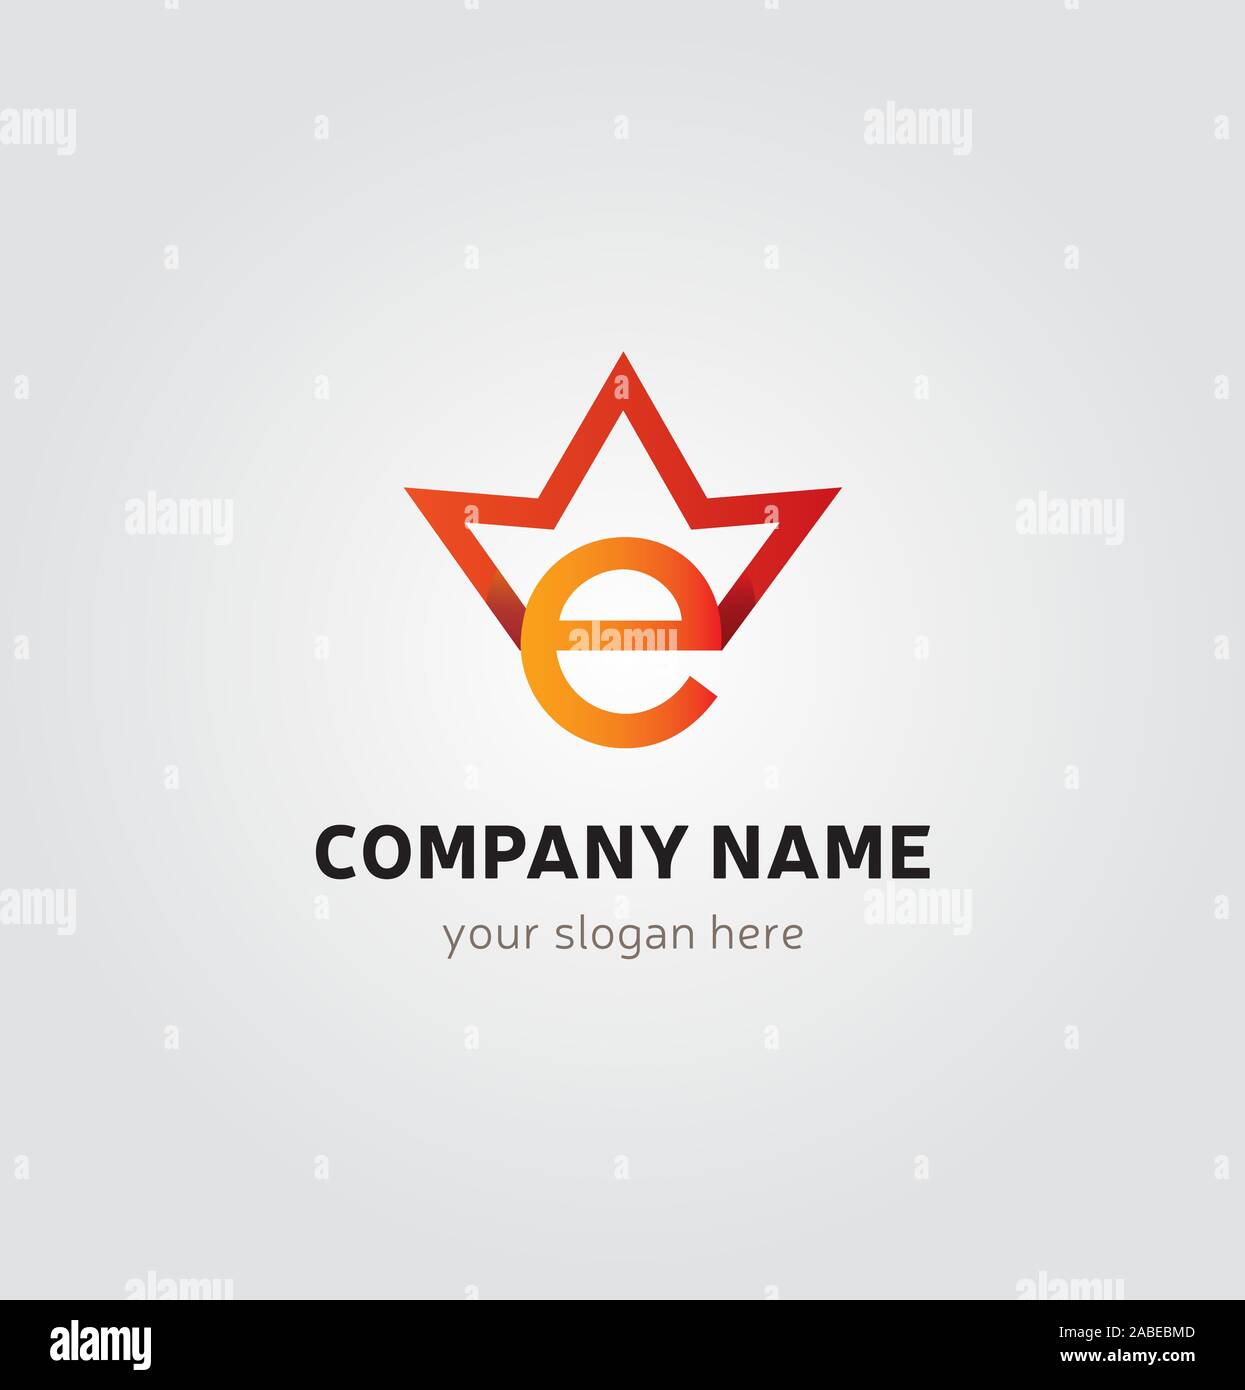 Single Logo Design - E Brief mit Krone - Rot und Orange Farben Stock Vektor